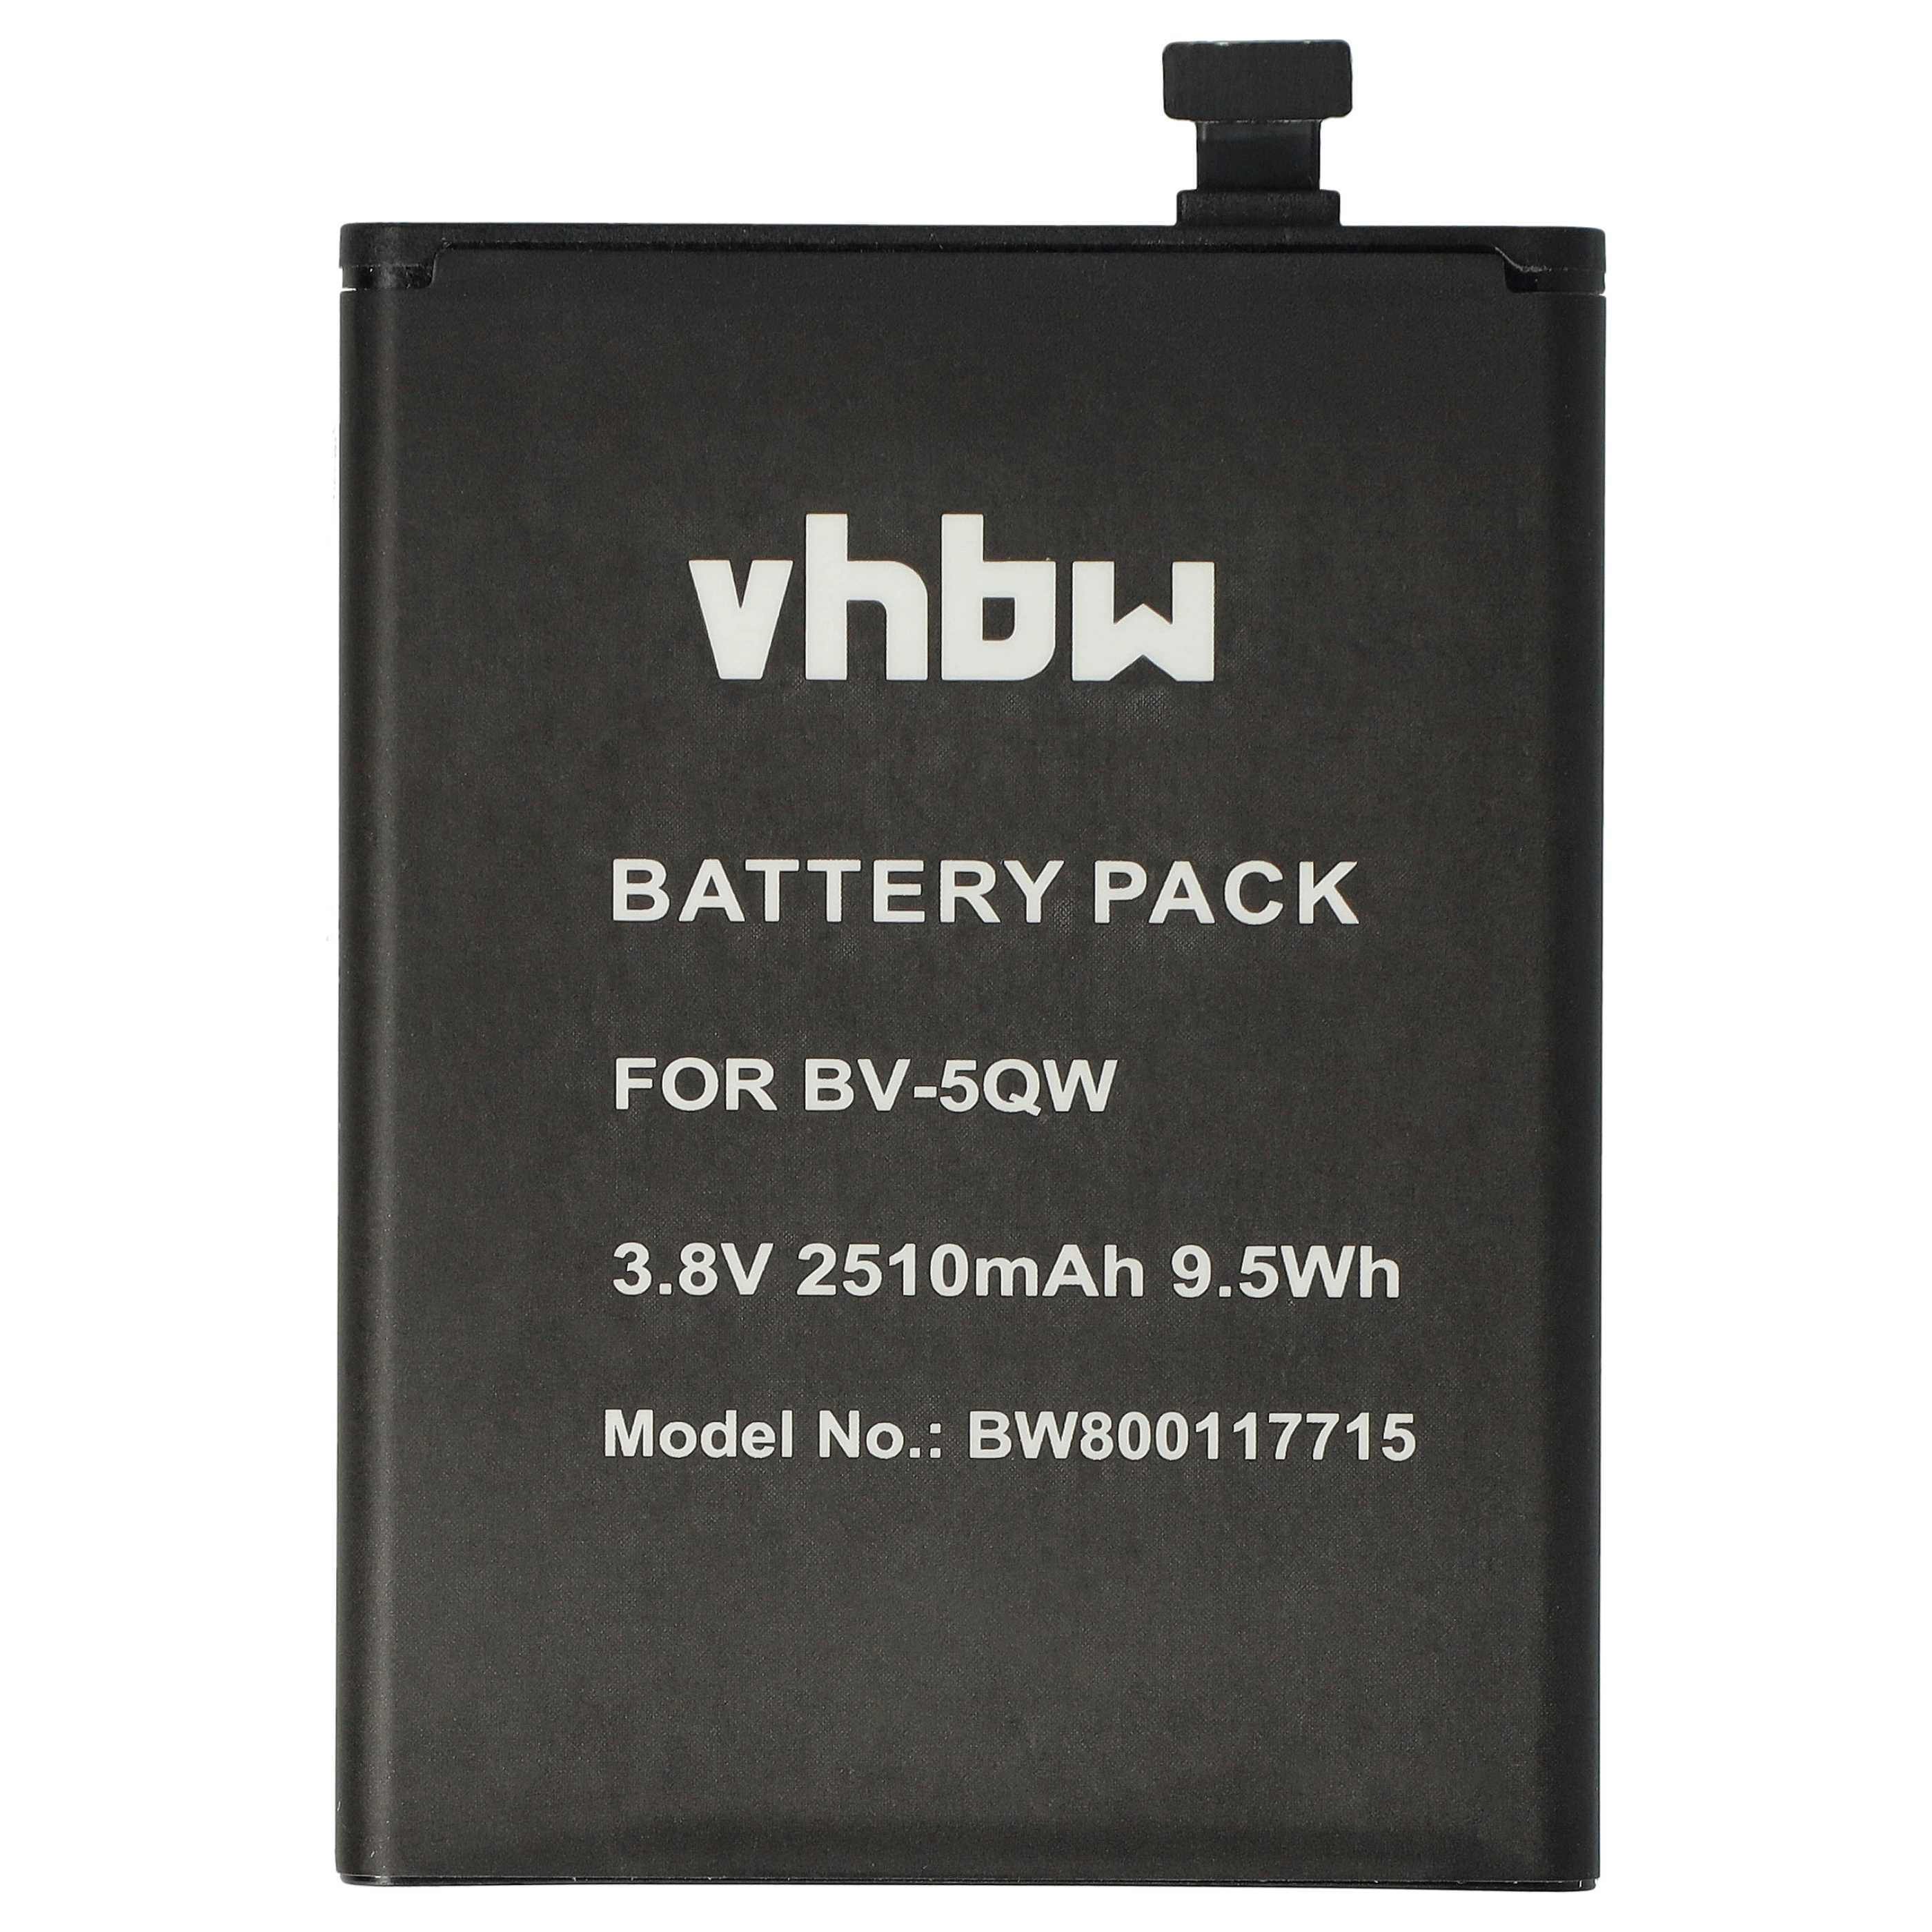 Batería reemplaza Microsoft / Nokia BV-5QW para móvil, teléfono Microsoft / Nokia - 2510 mAh 3,8 V Li-Ion